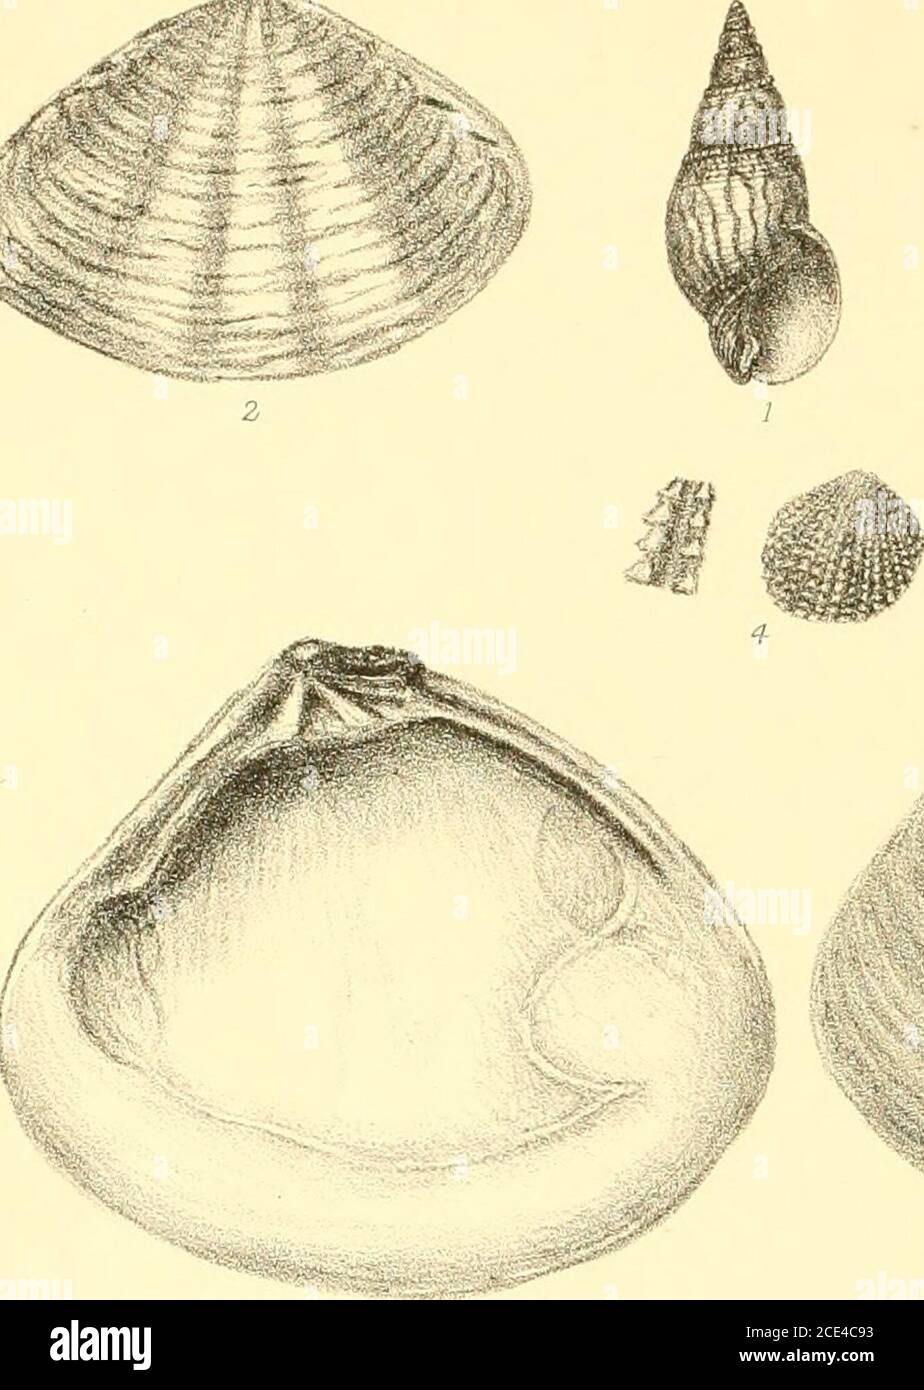 . Appendix to Marine shells of South Africa : a catalogue of all the known species : with references to figures in various works, descriptions of new species, and figures of such as are new, little known, or hitherto unfigured . VI. Fig. I. Bullia pustulosa. ,, 2. Marginella Ponsonbyi. ,, 3. Columbella Kitchingi.,,4. ,, pyramidalis. ,, 5. Scalaria simplex. ,, 6. Natica Queketti. „ 7. Latirus abnormis. „ 8. Cioniscus unilineatus. ,, g. Eulima simplex. ,, 10. Cioniscus pellucidus. ,, II. Odostomia lucida. ,, 12. Cerithiopsis lirata. ,, 13. „ exquisita. ,, 14. Clathurella verrucosa. ,, 15. Rissoa Stock Photo